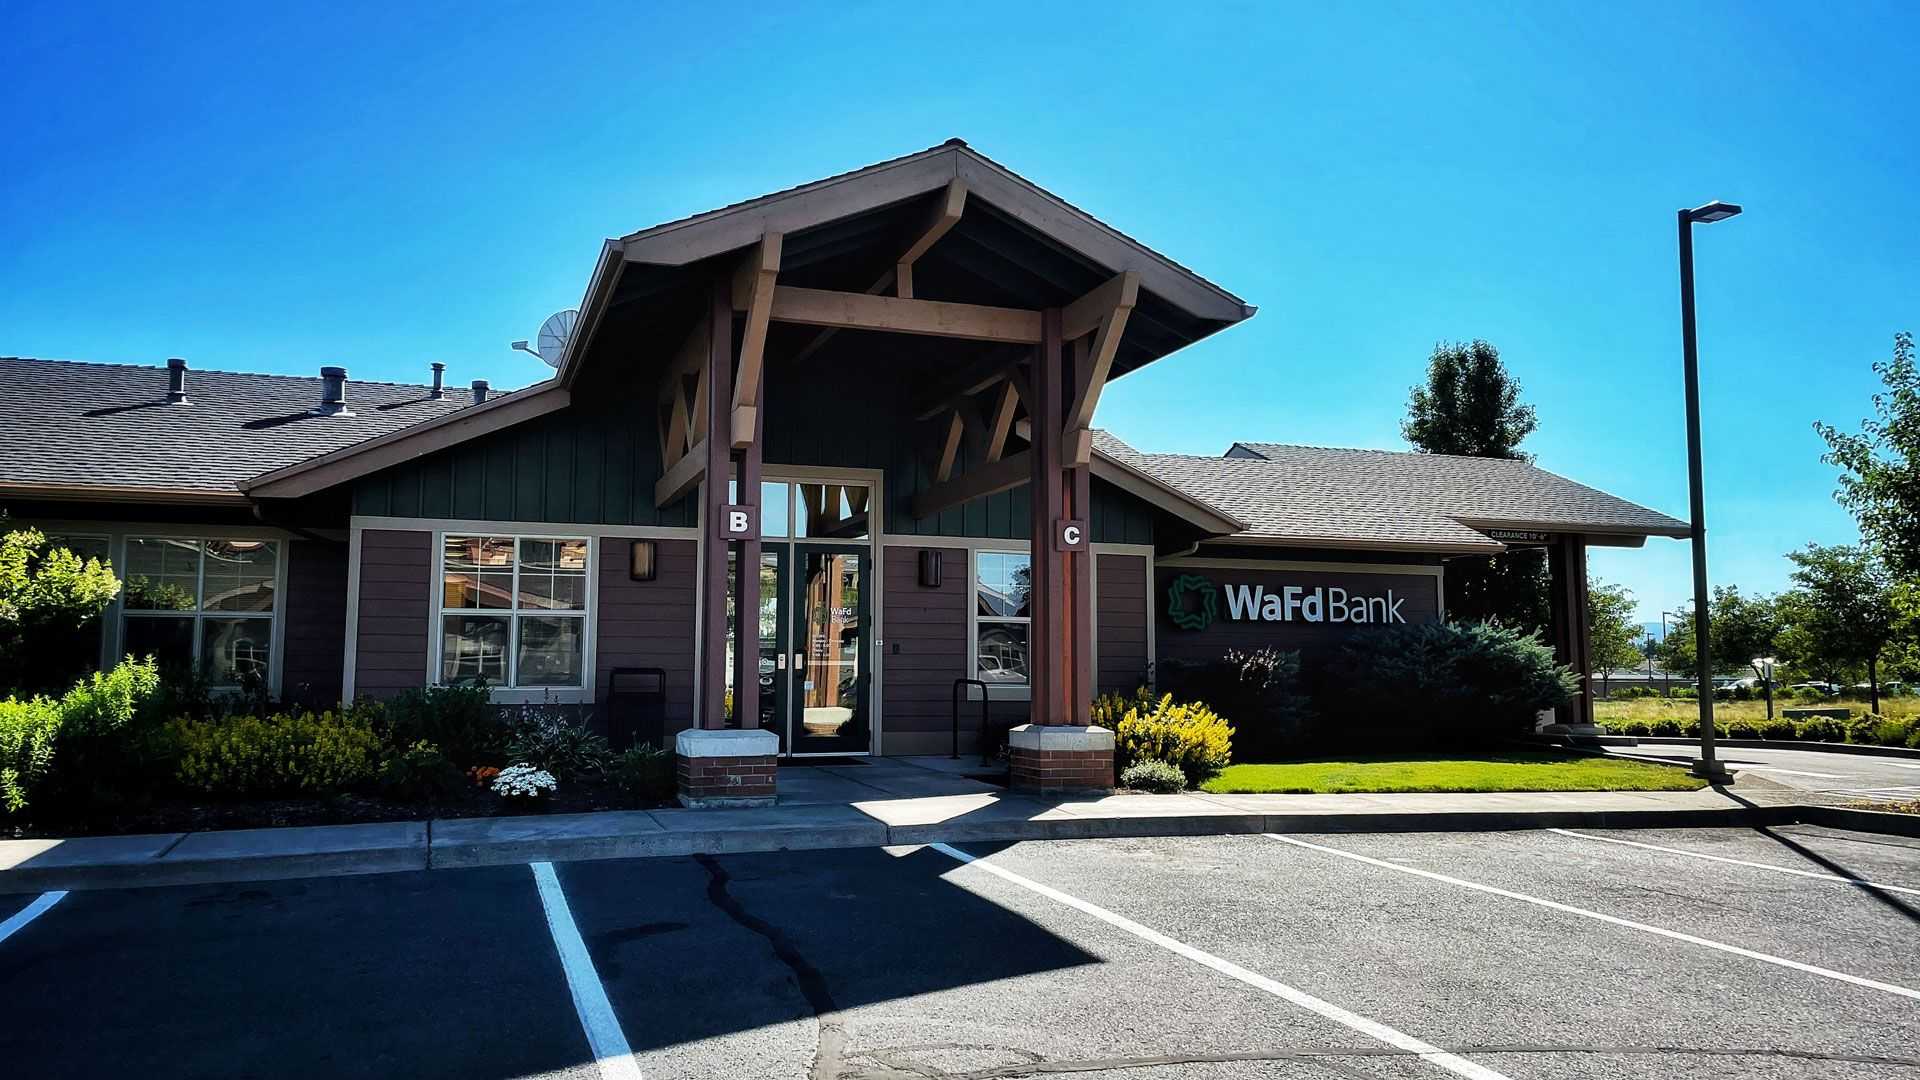 WaFd Bank in Bend, Oregon #1154 - Washington Federal.